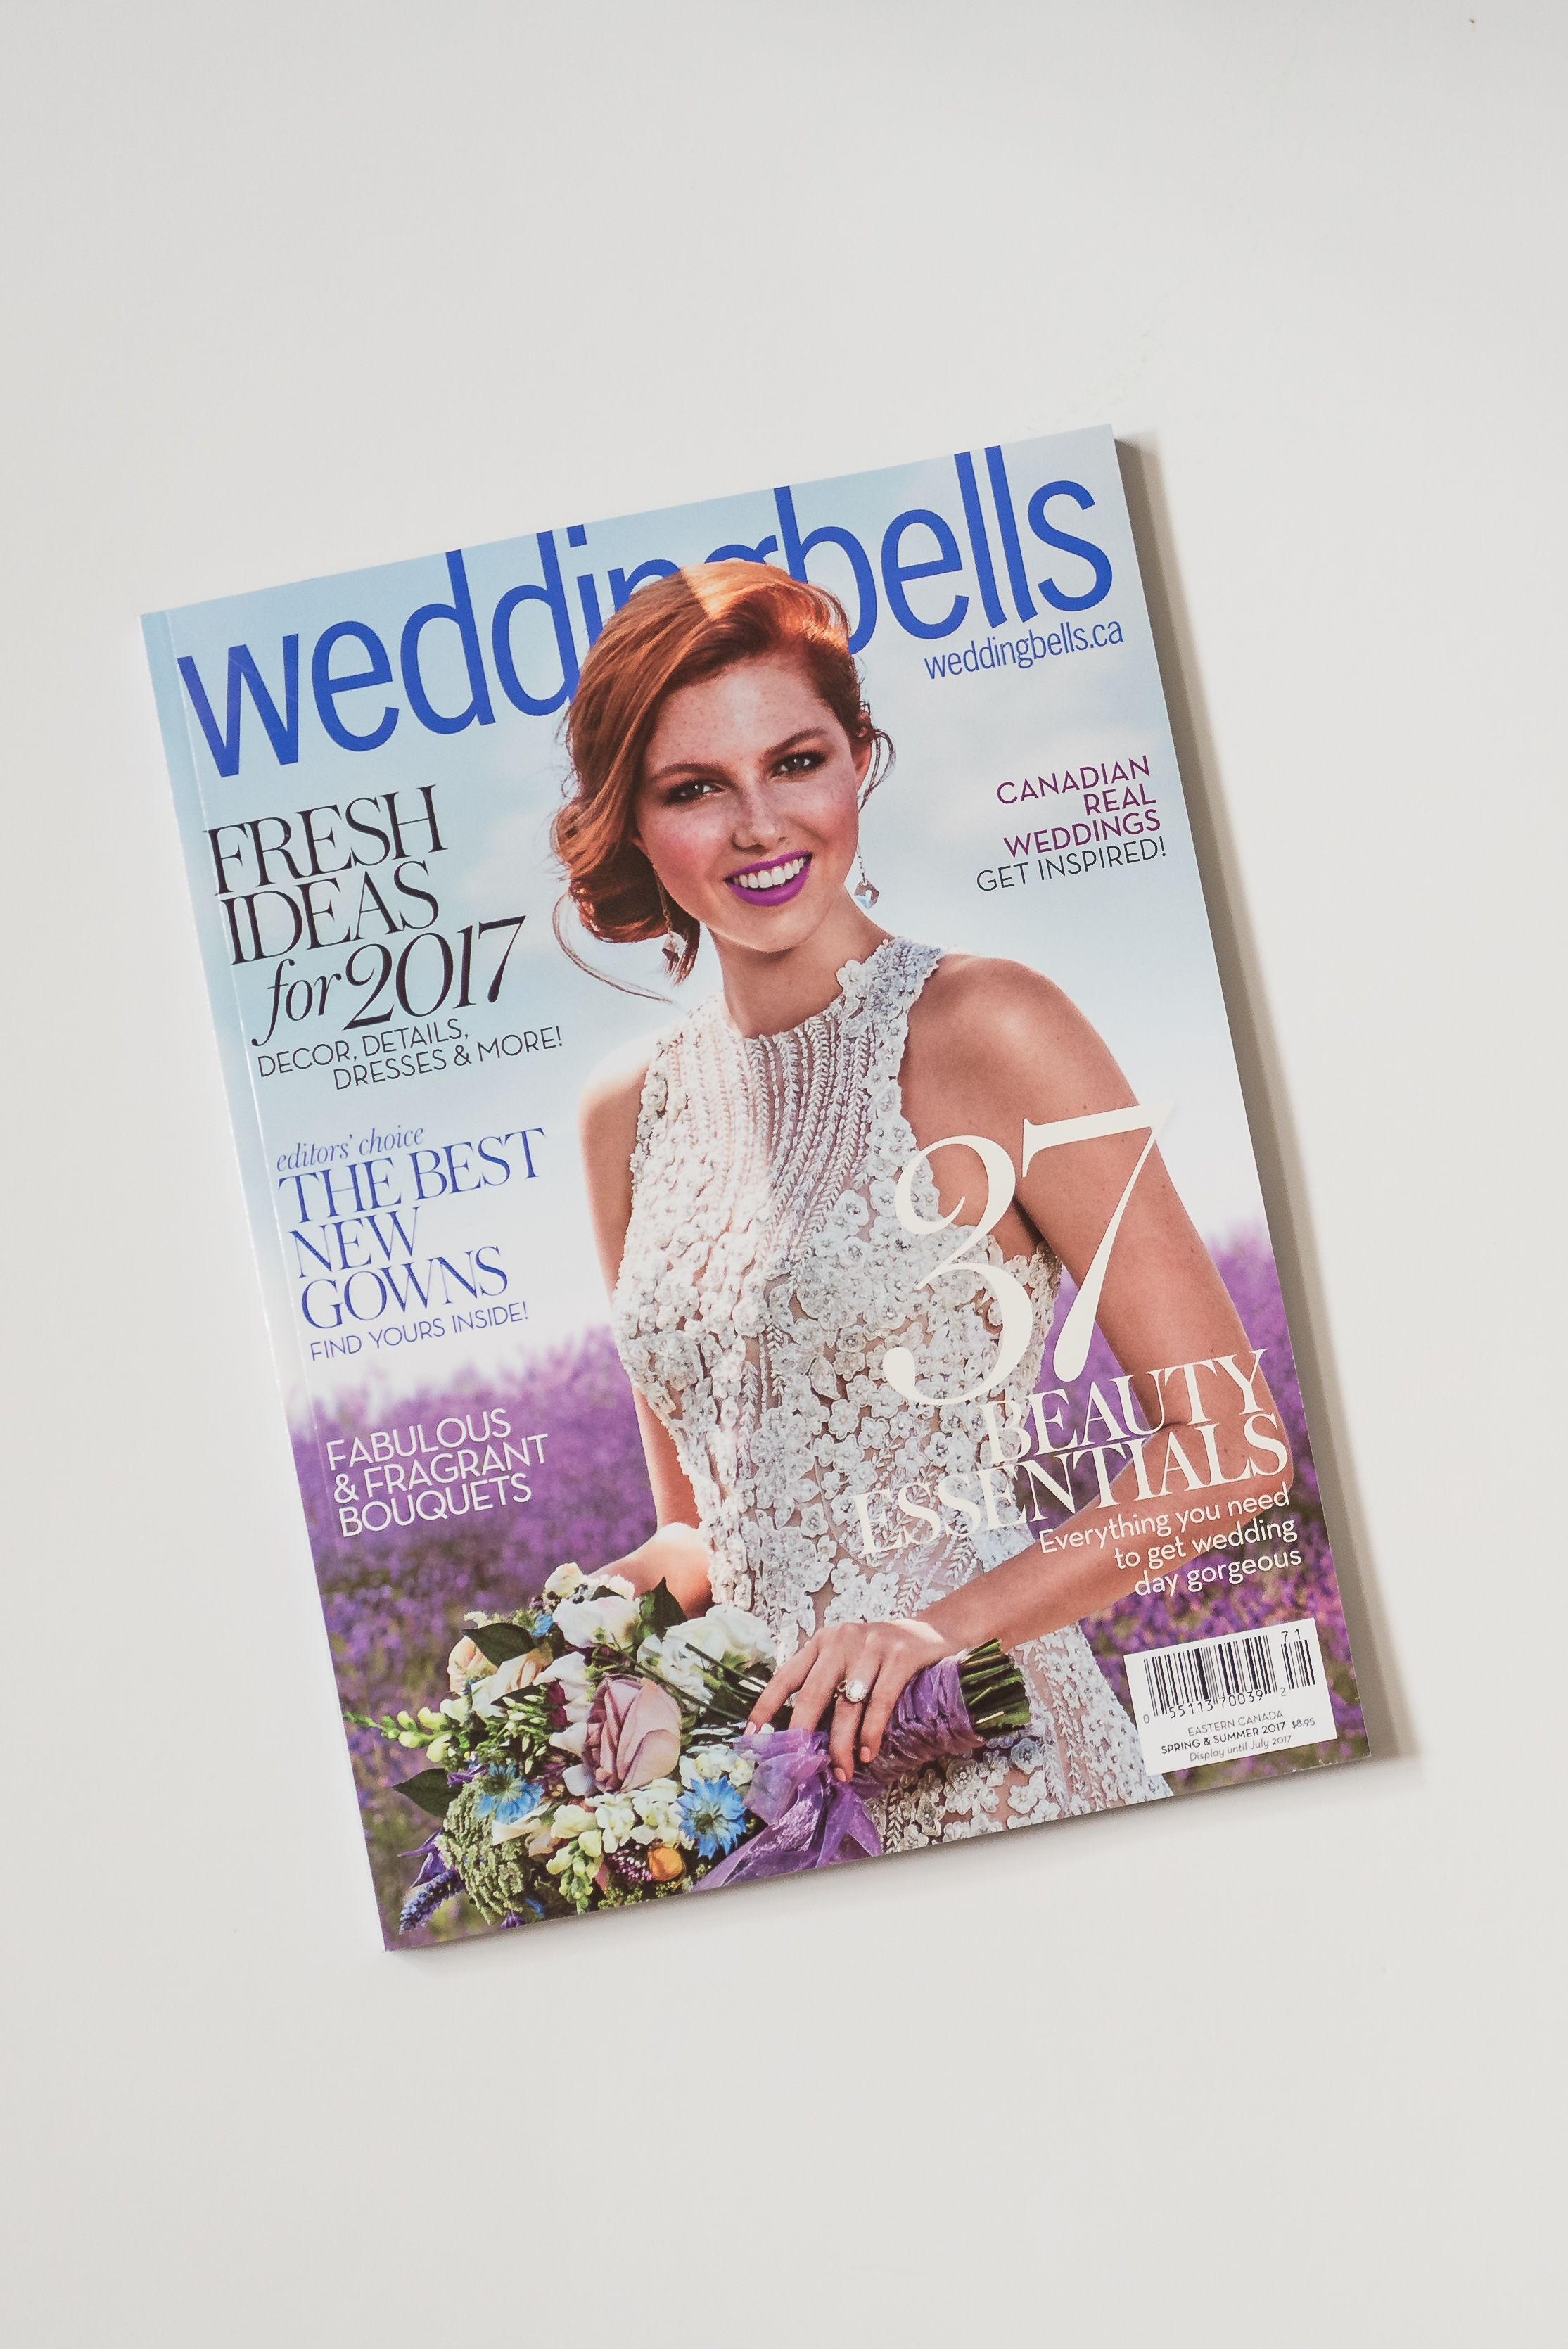 Weddingbells magazine